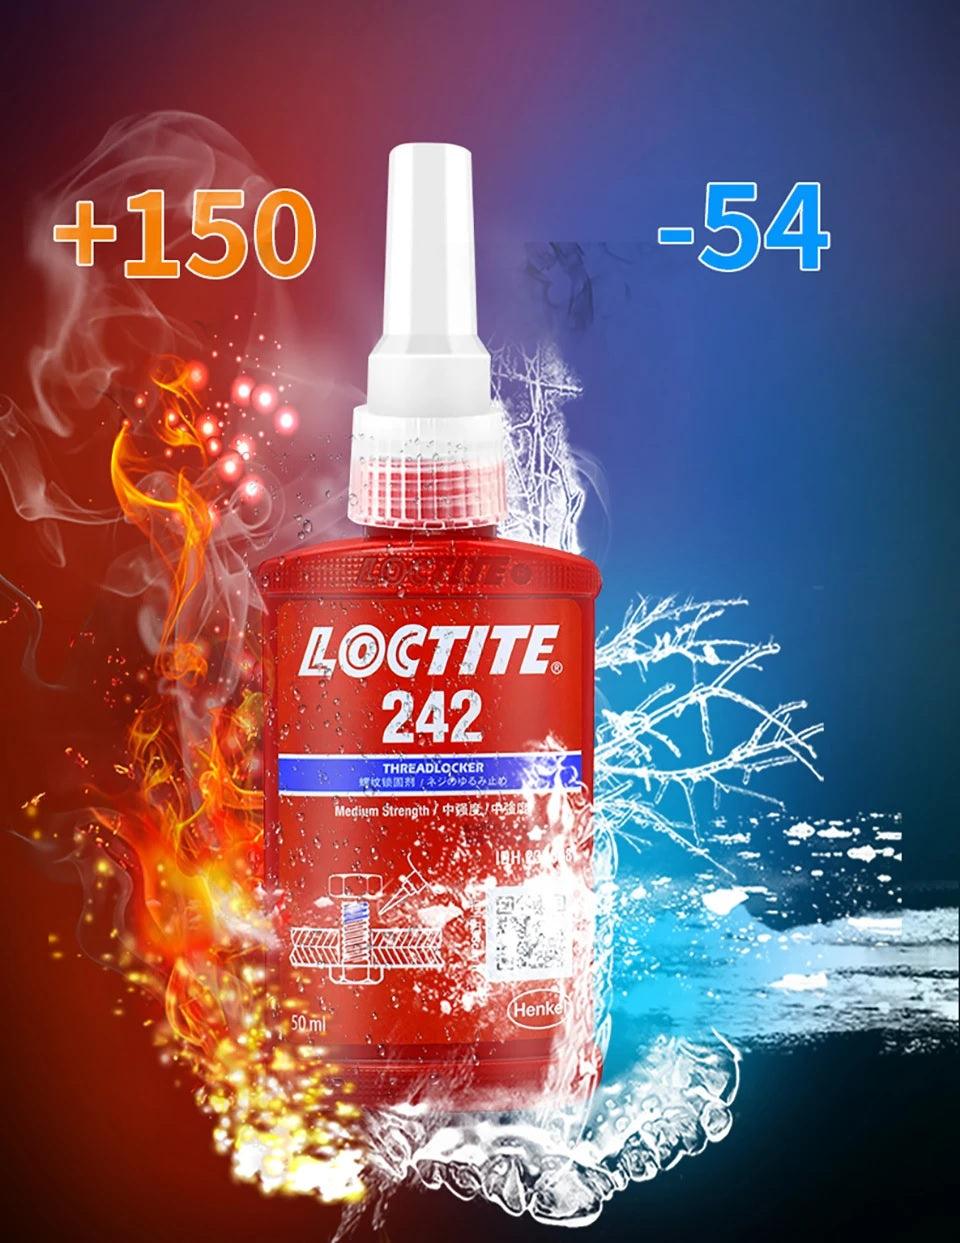 Loctite 242 Adhesivo Fijador Rosca 50 ML - Colmenero Shop